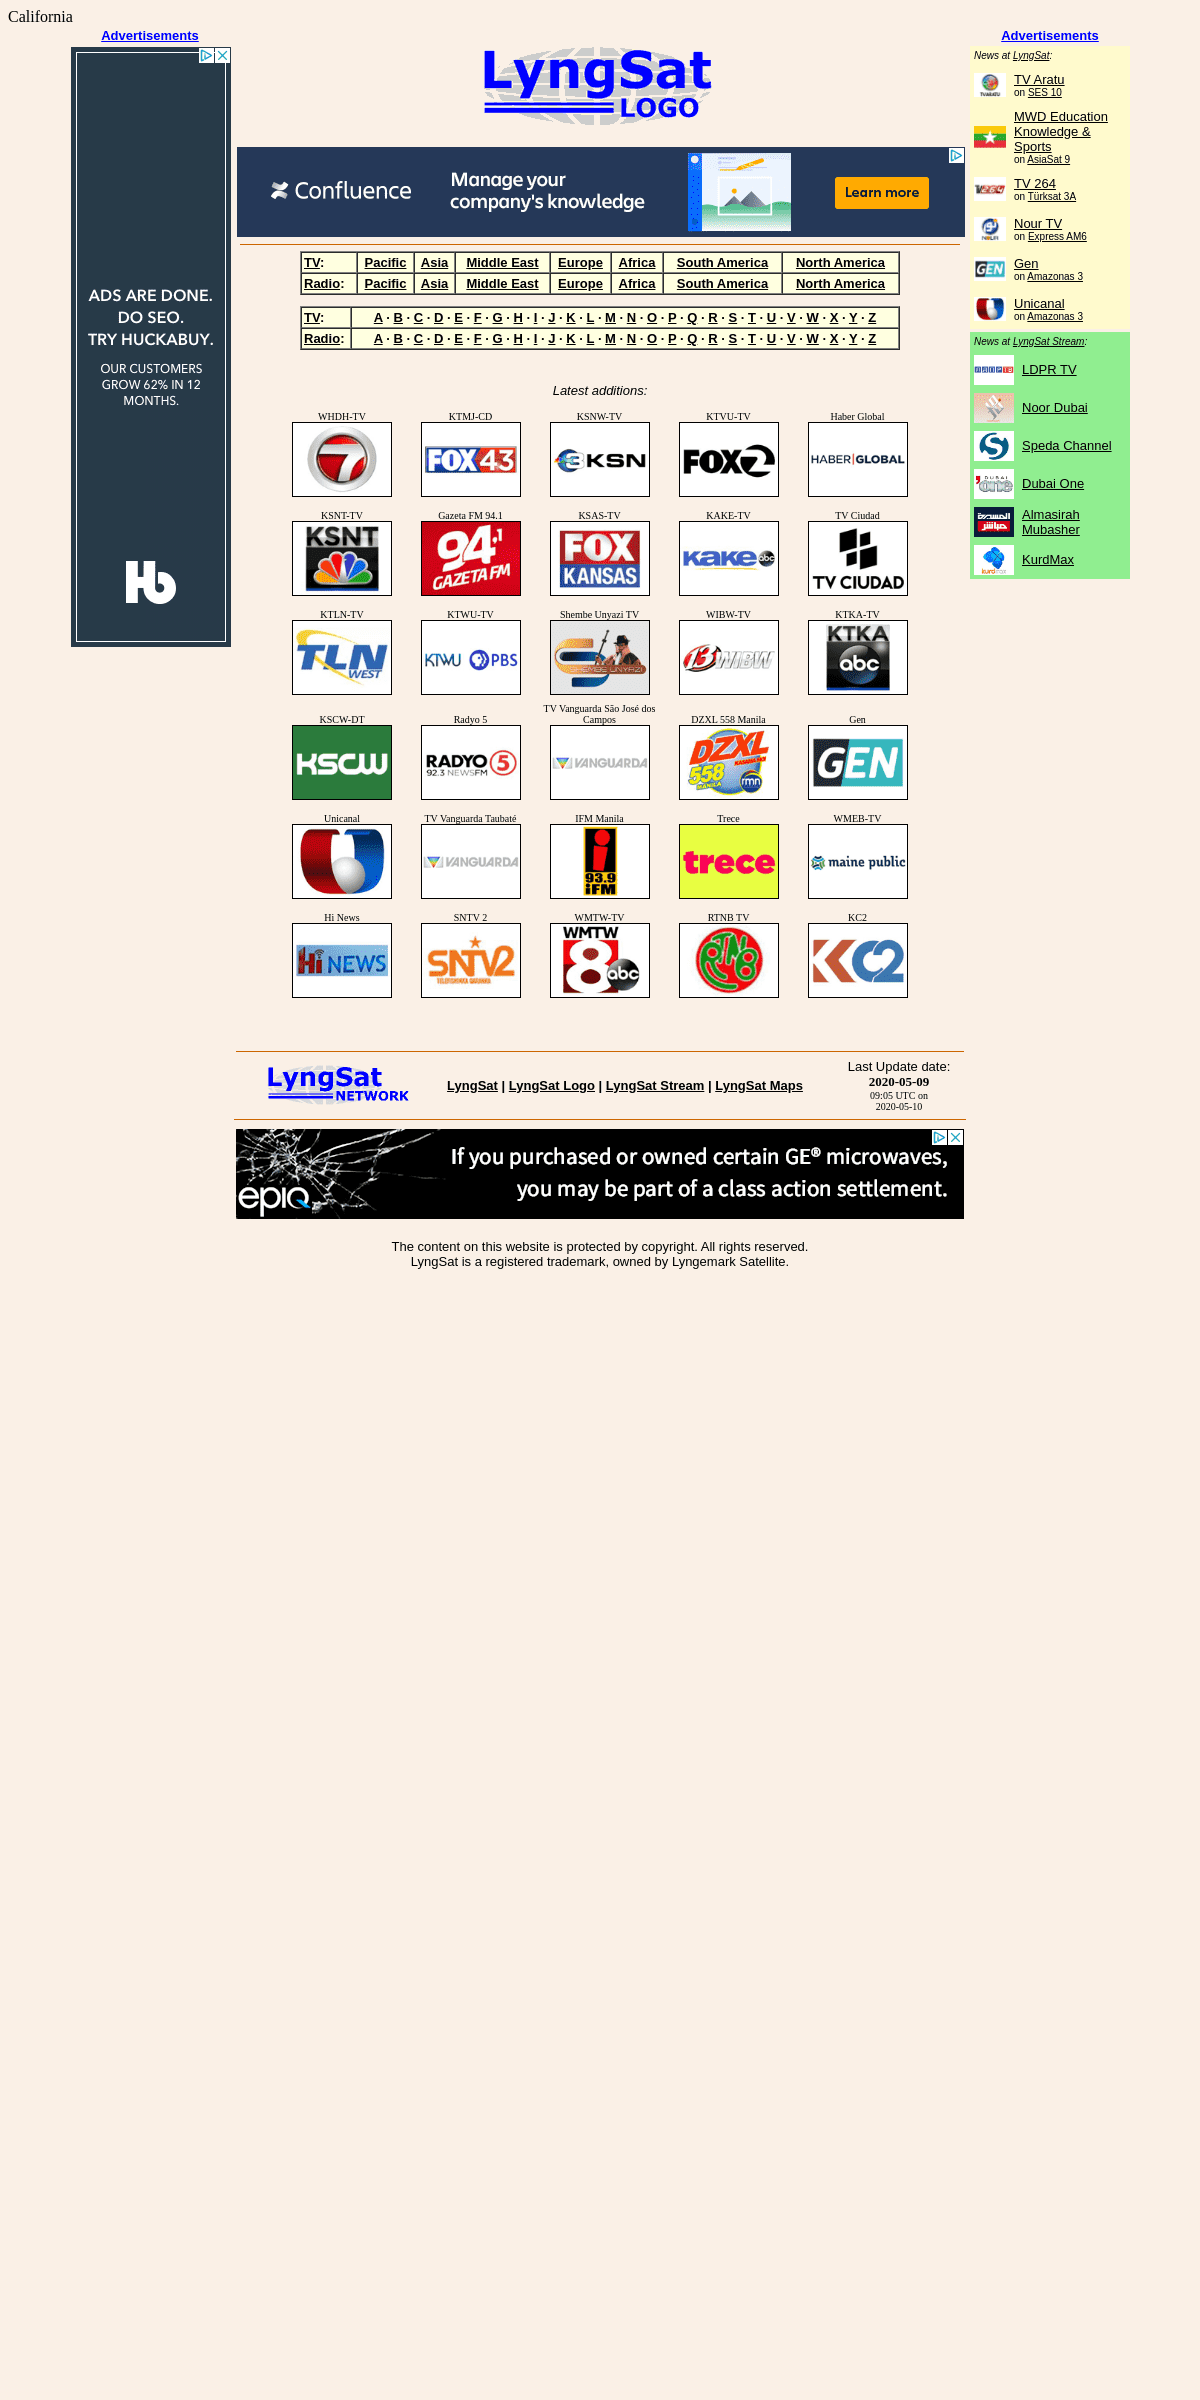 A complete backup of lyngsat-logo.com